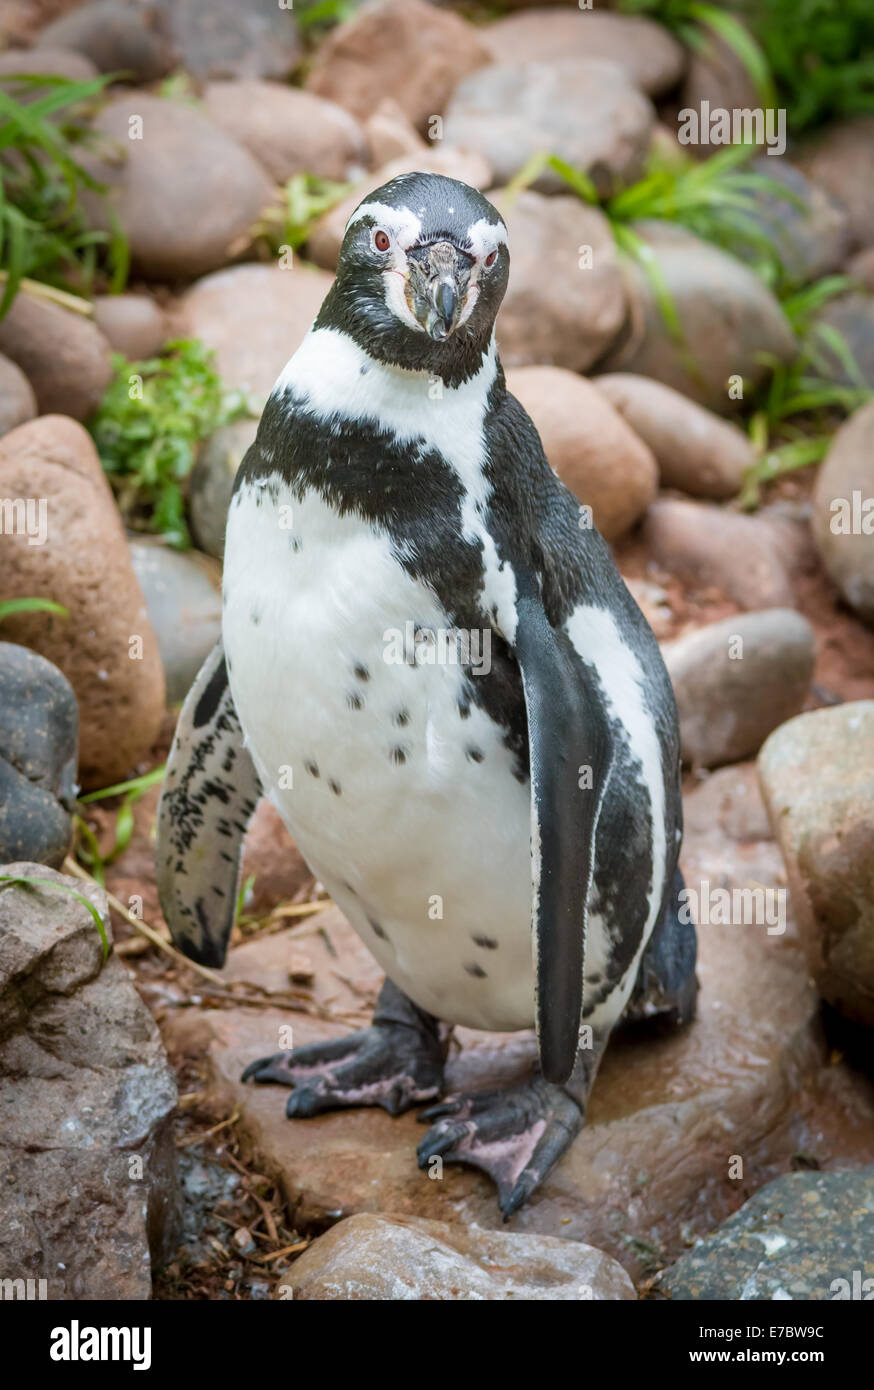 A Humboldt Penguin sat on rocks in captivity Stock Photo